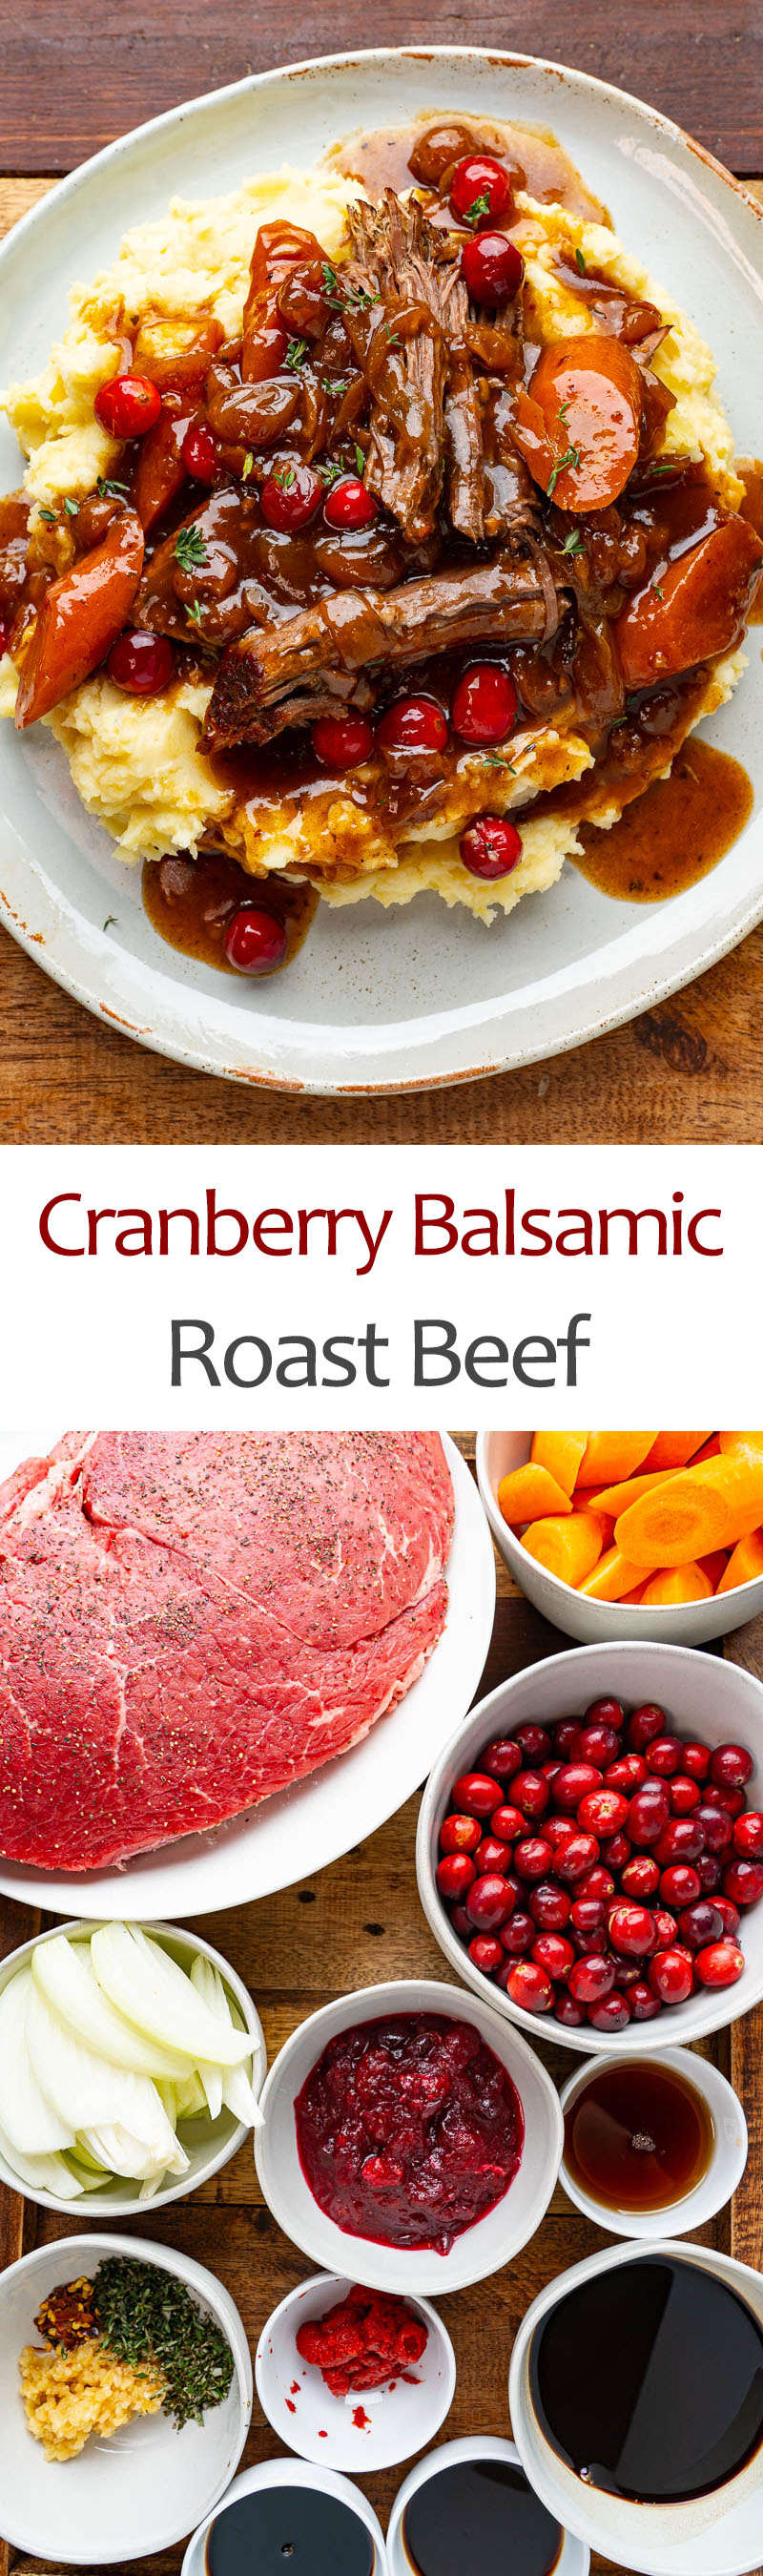 Cranberry Balsamic Roast Beef